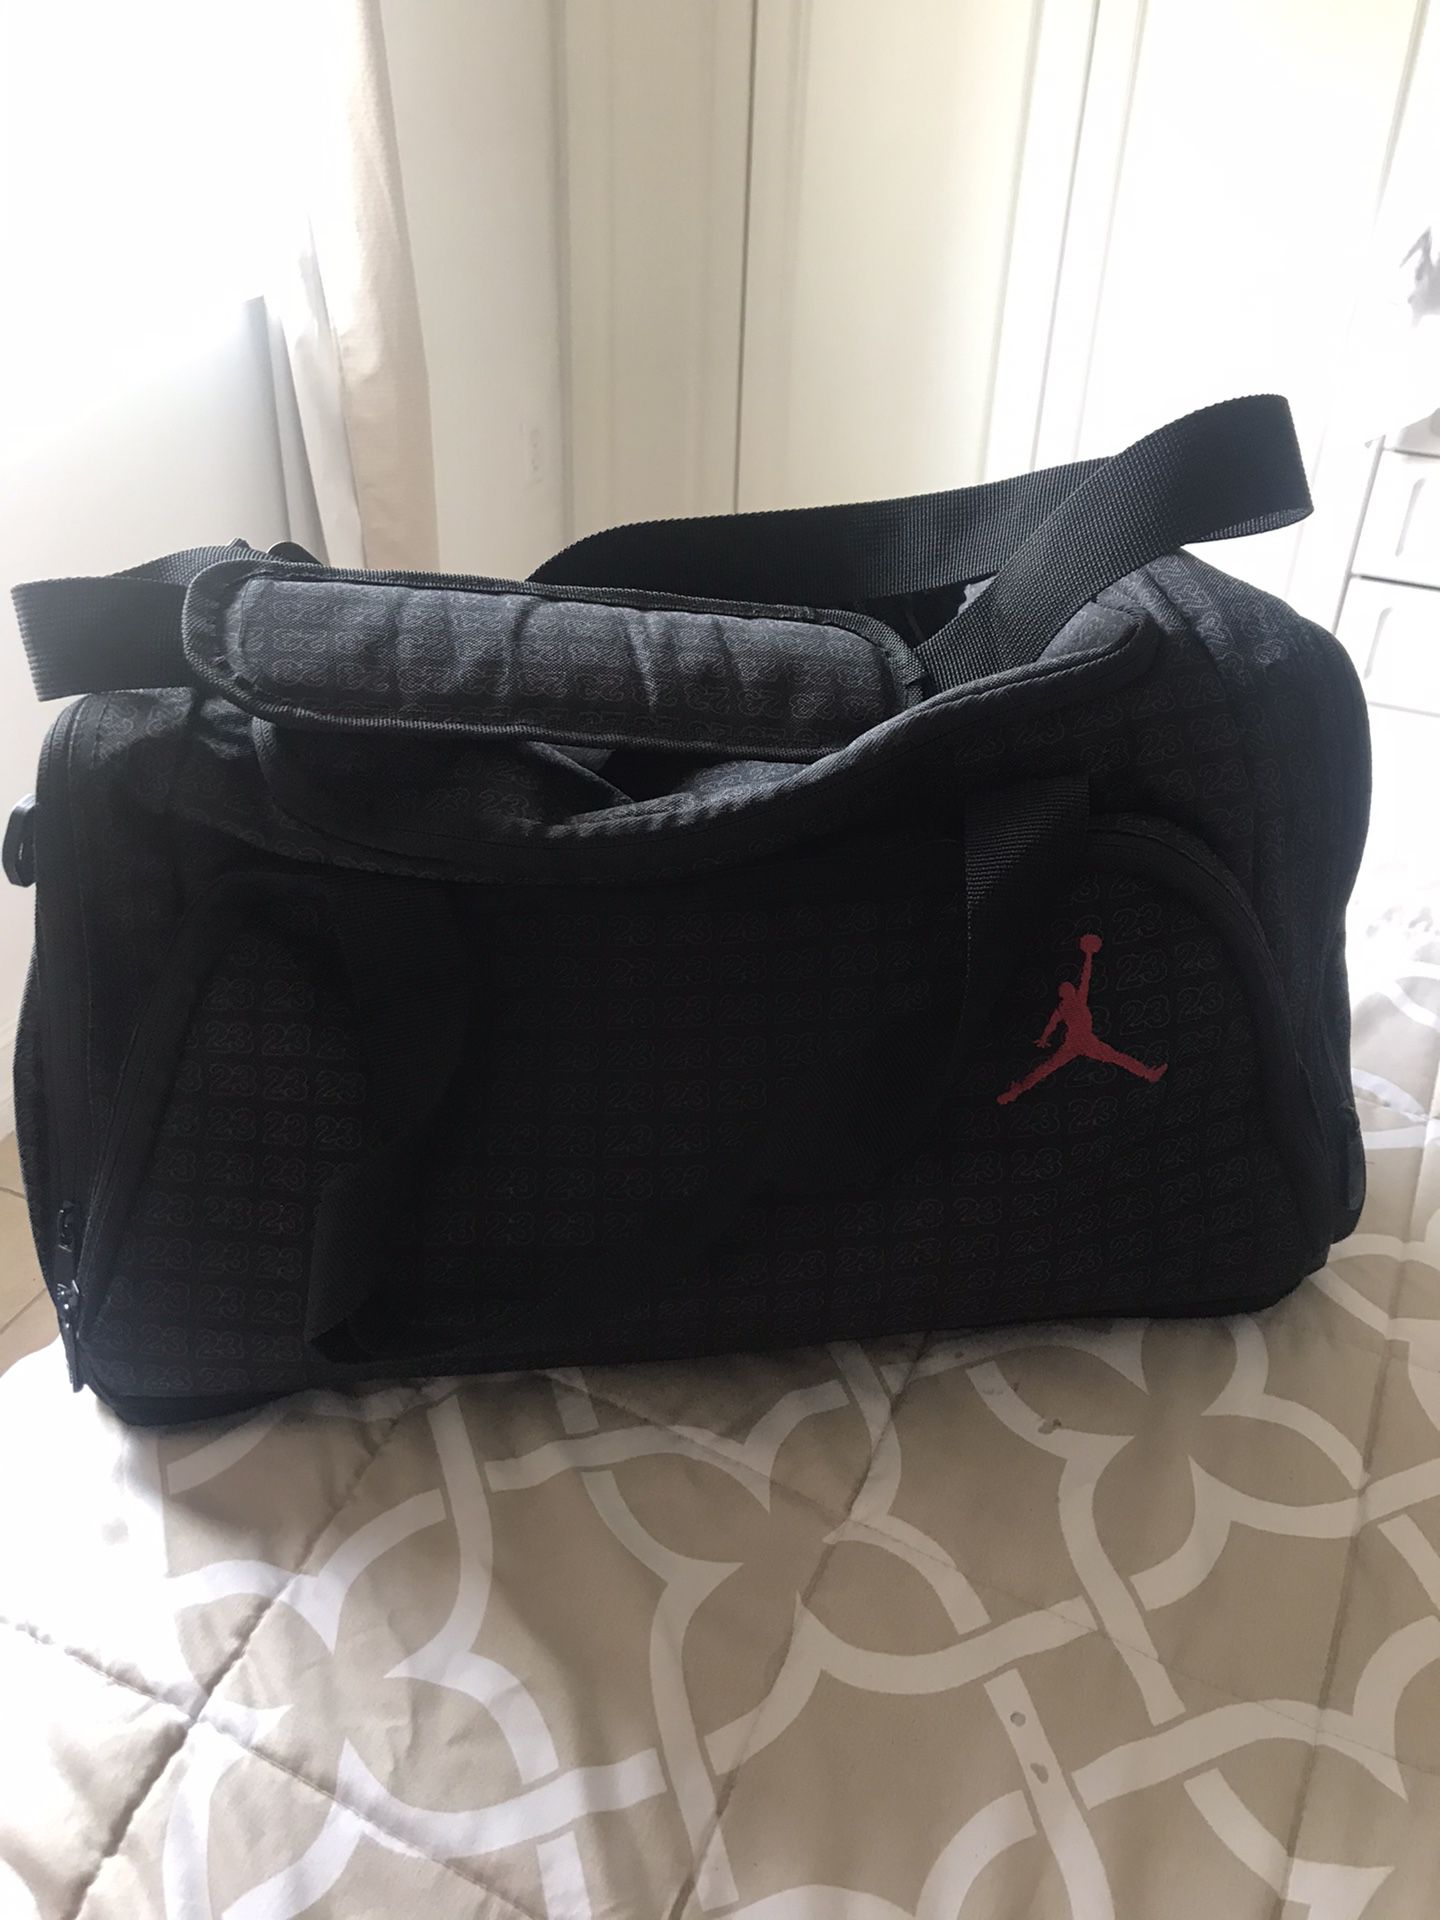 Michael Jordan duffle bag